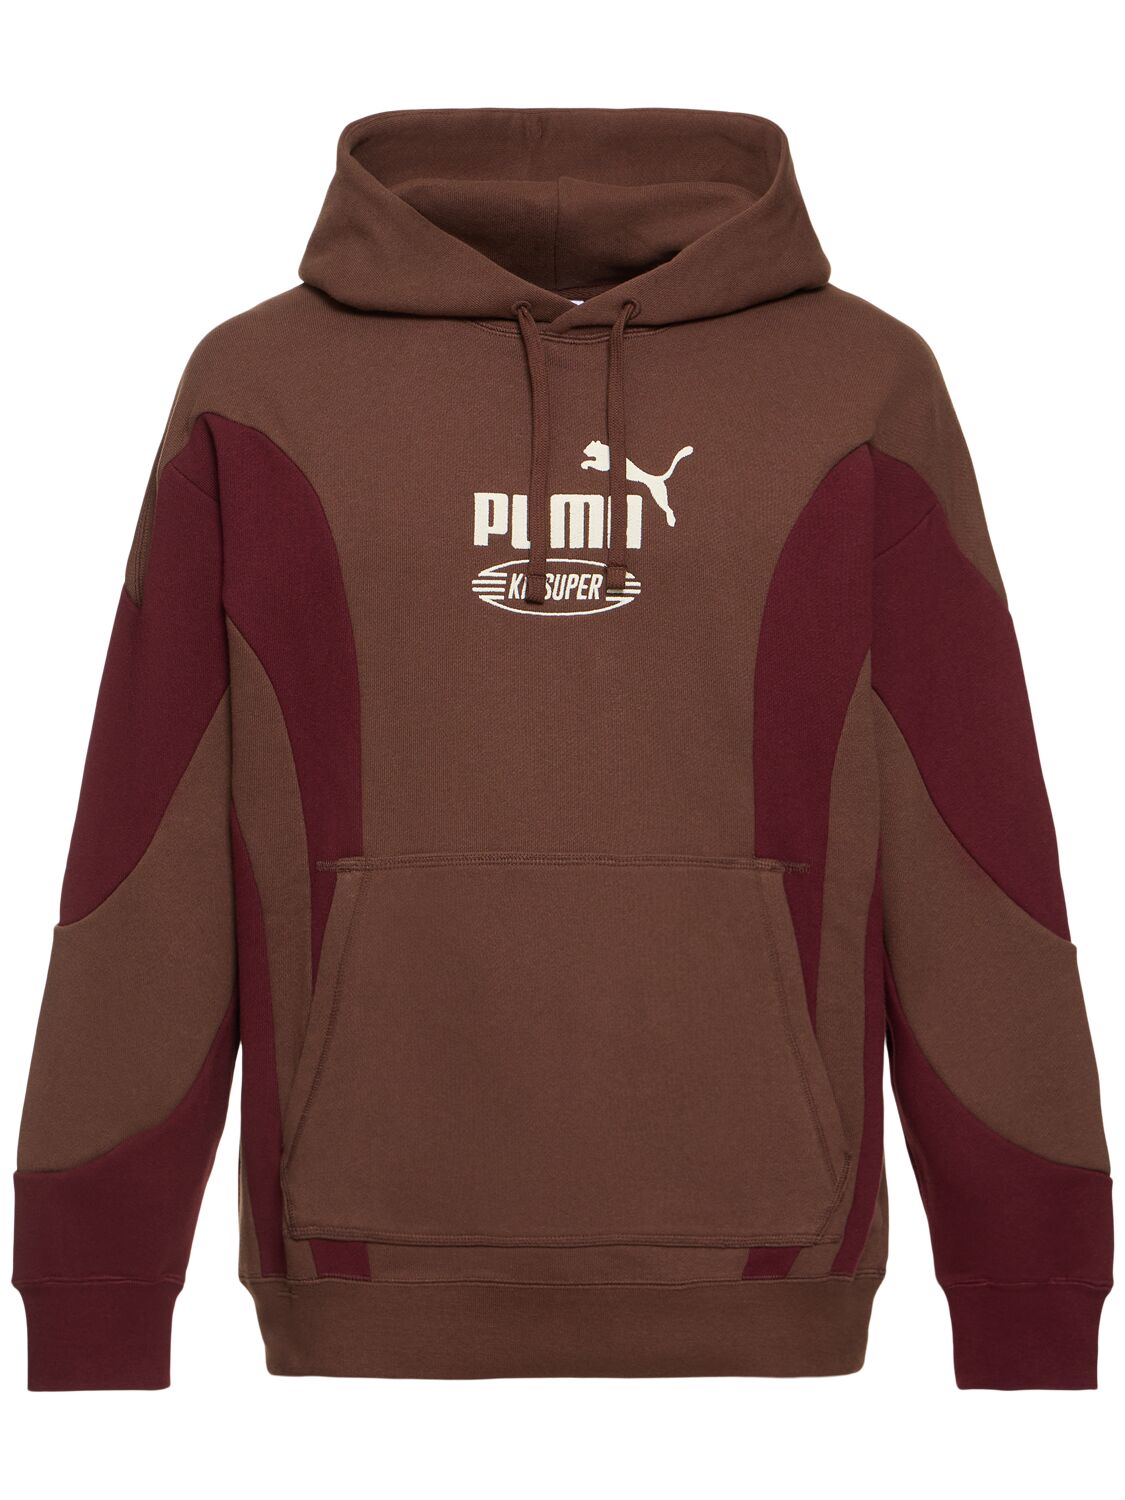 Puma Kidsuper Studios Hooded Sweatshirt In Chesnut Brown